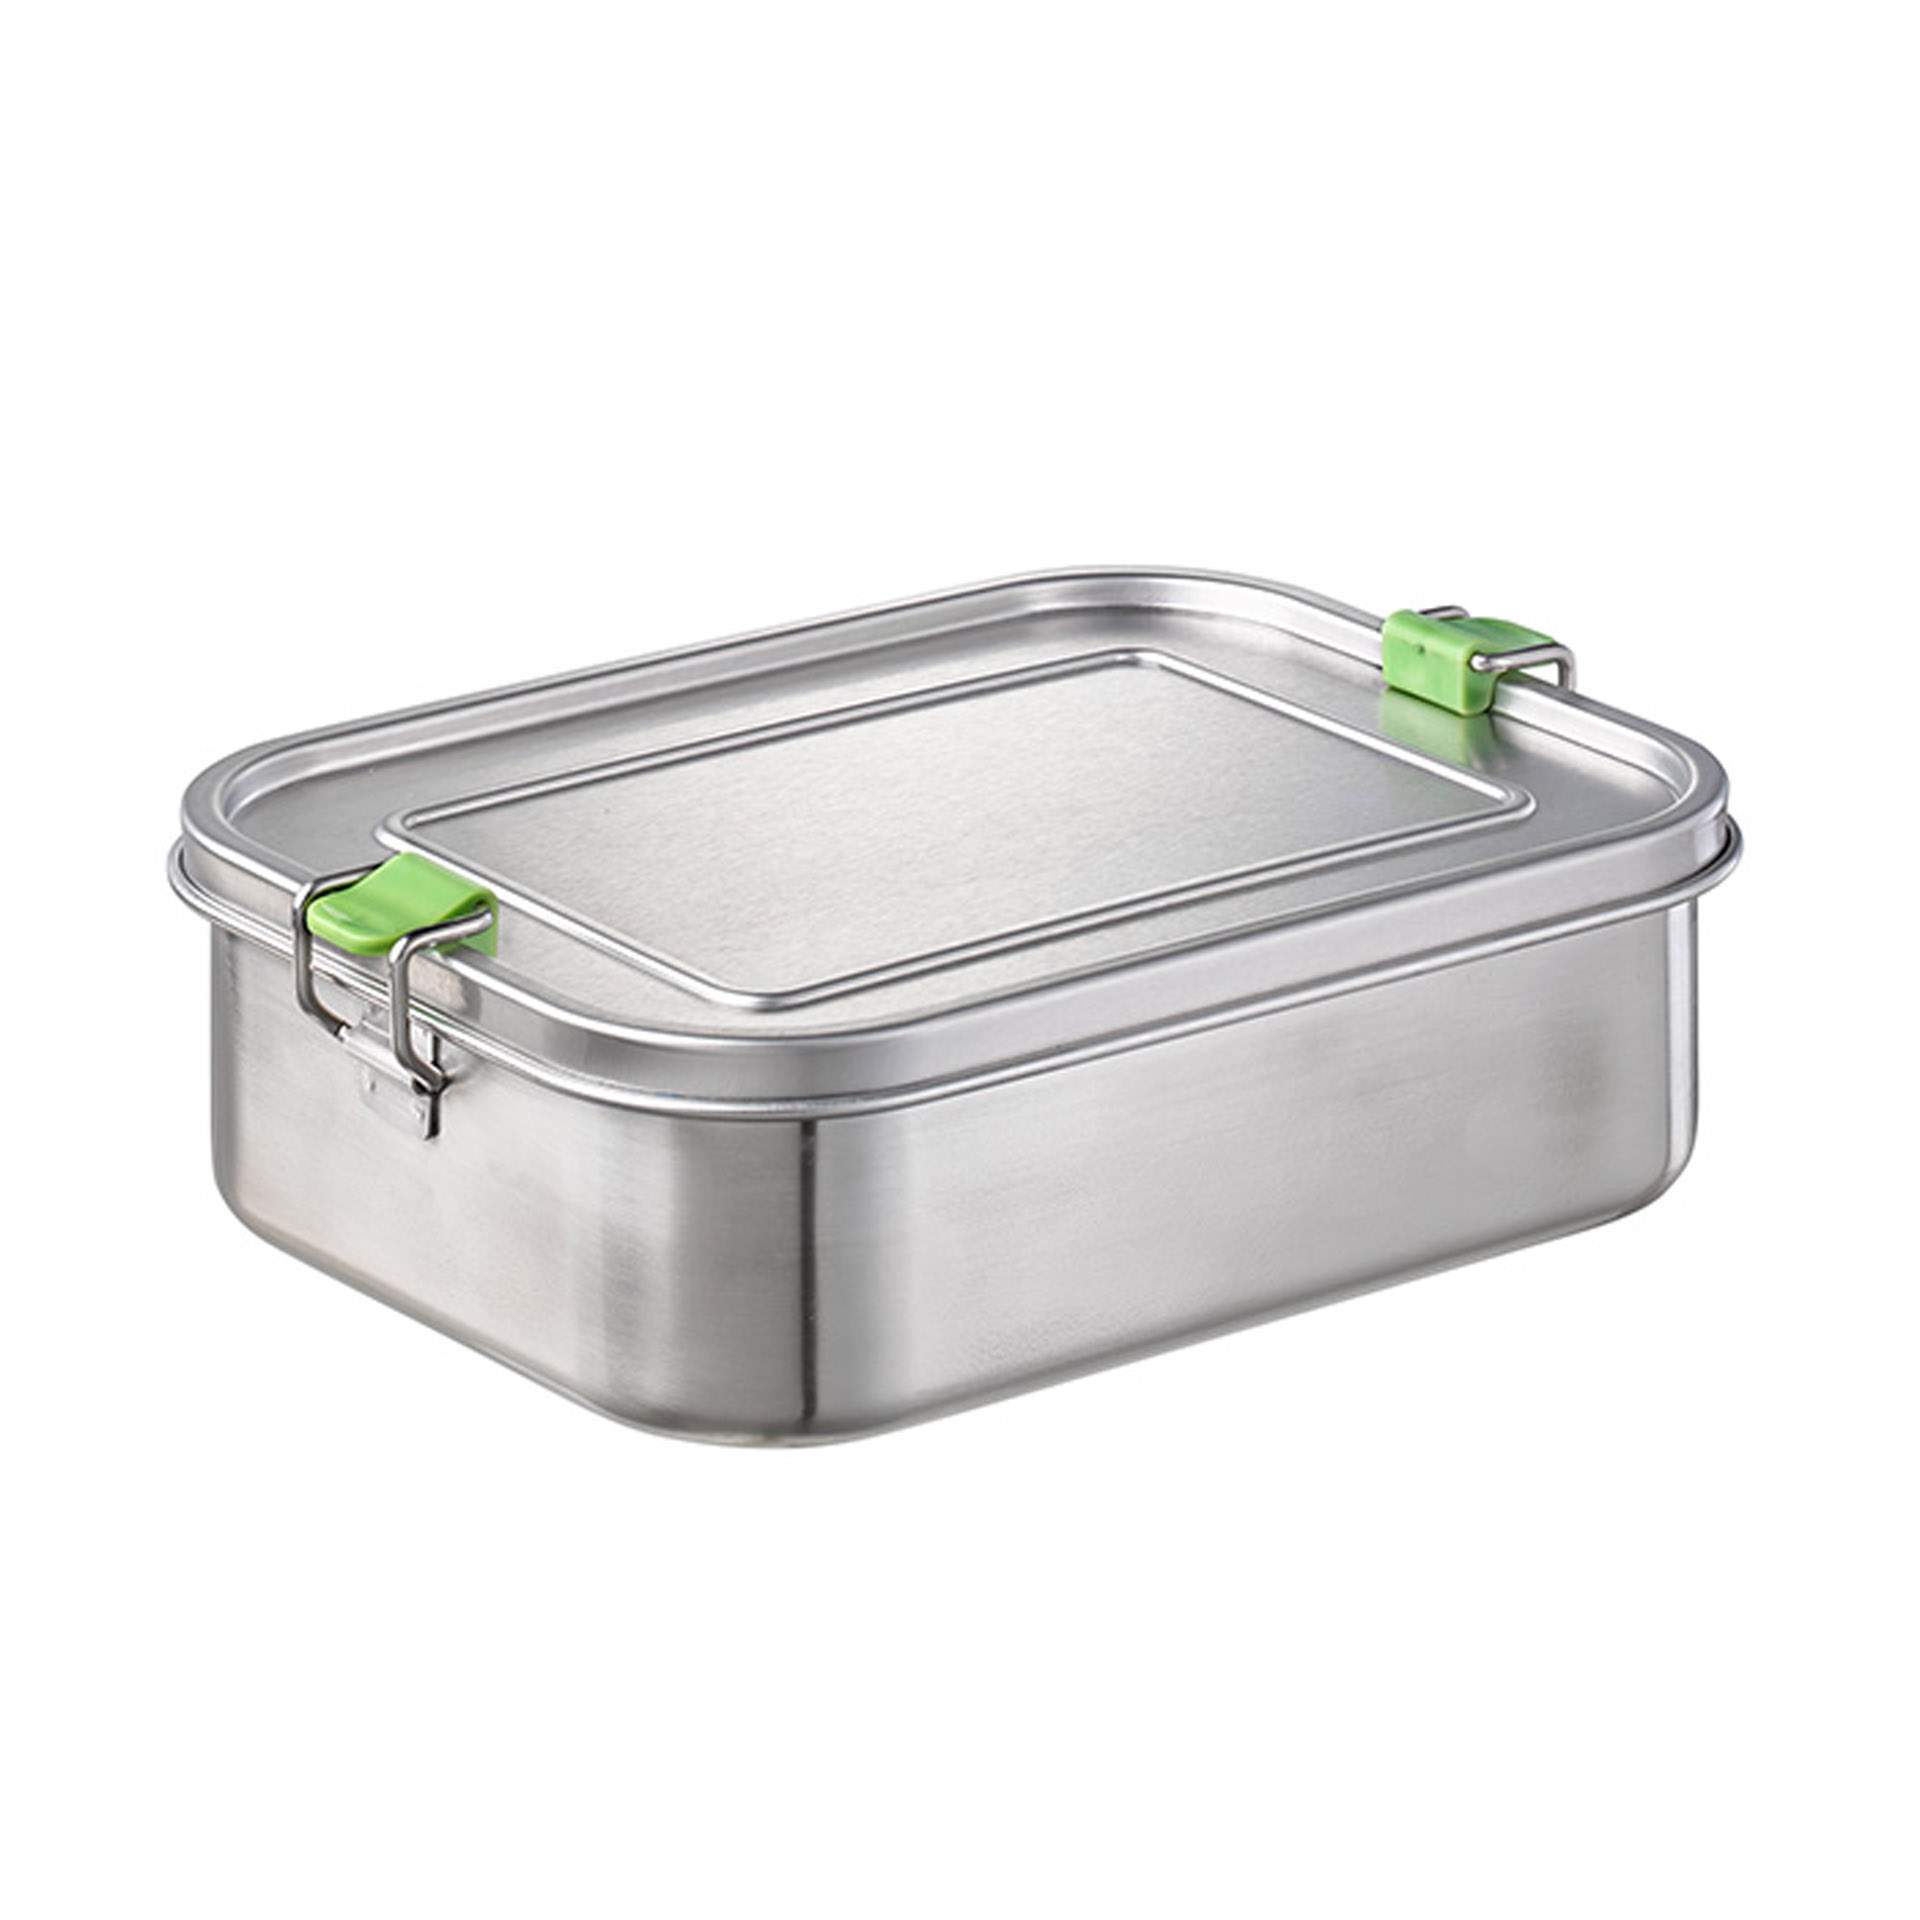 Lunchbox - XL - Abm. 22,5 x 16,5 x 6,5 cm - Inhalt 1,4 l - Edelstahl - 66902-B